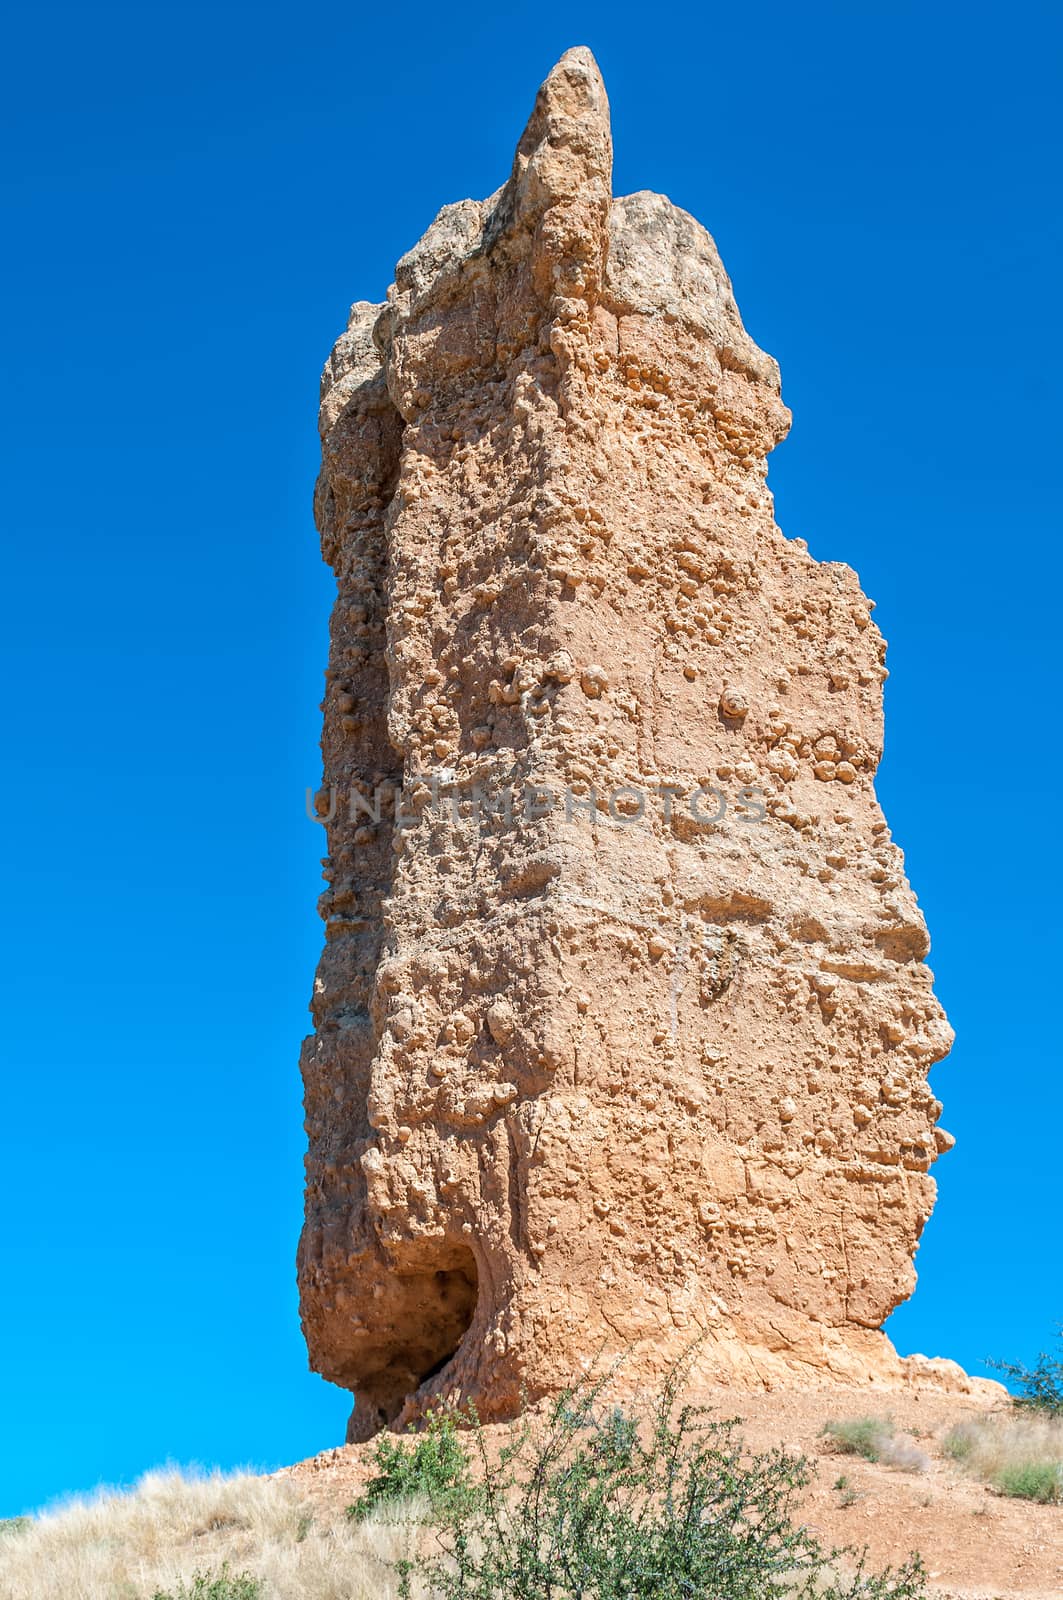 The Vingerklip, a sedimentary rock pillar near Outjo in Namibia